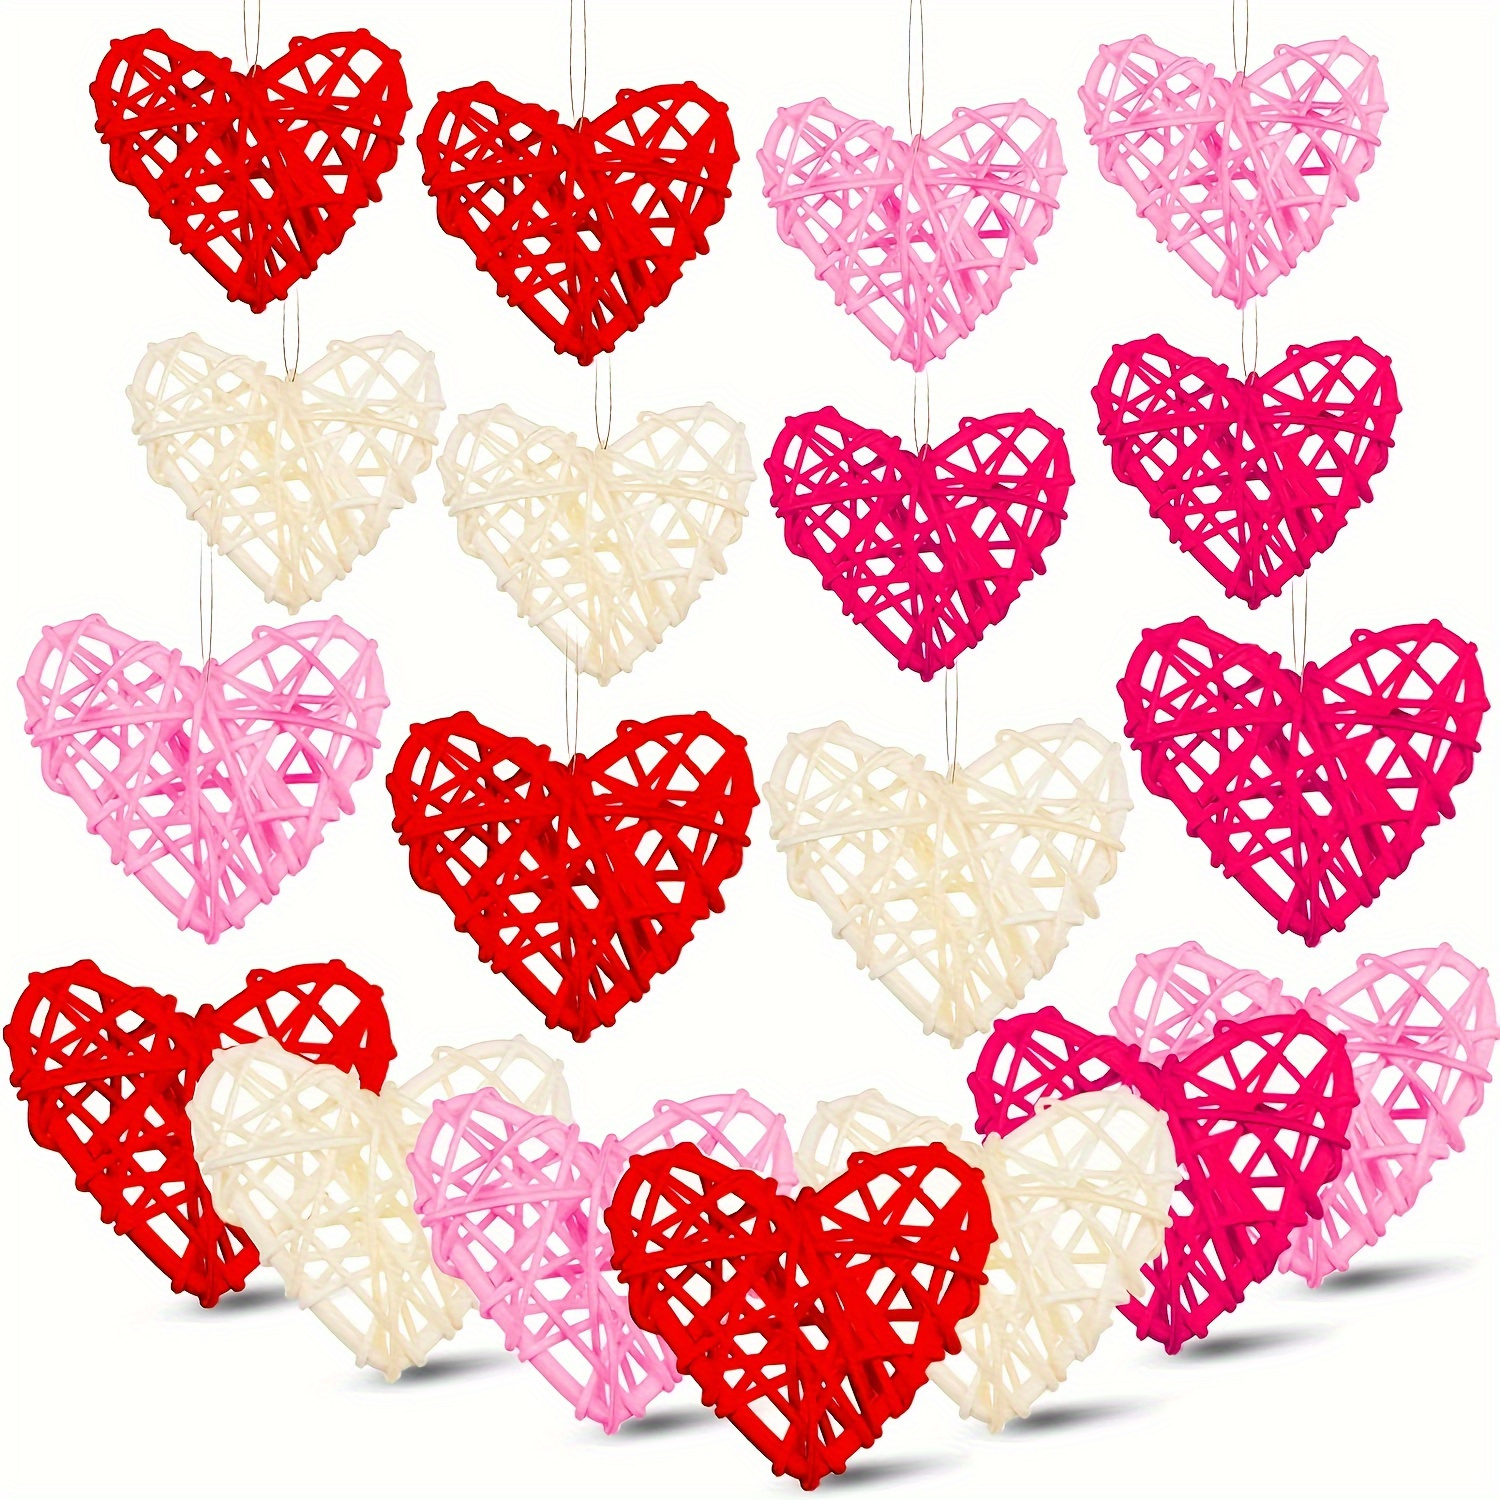 60Pcs/Bag Love Foam Hearts EVA Self-Adhesive Stickers Valentines